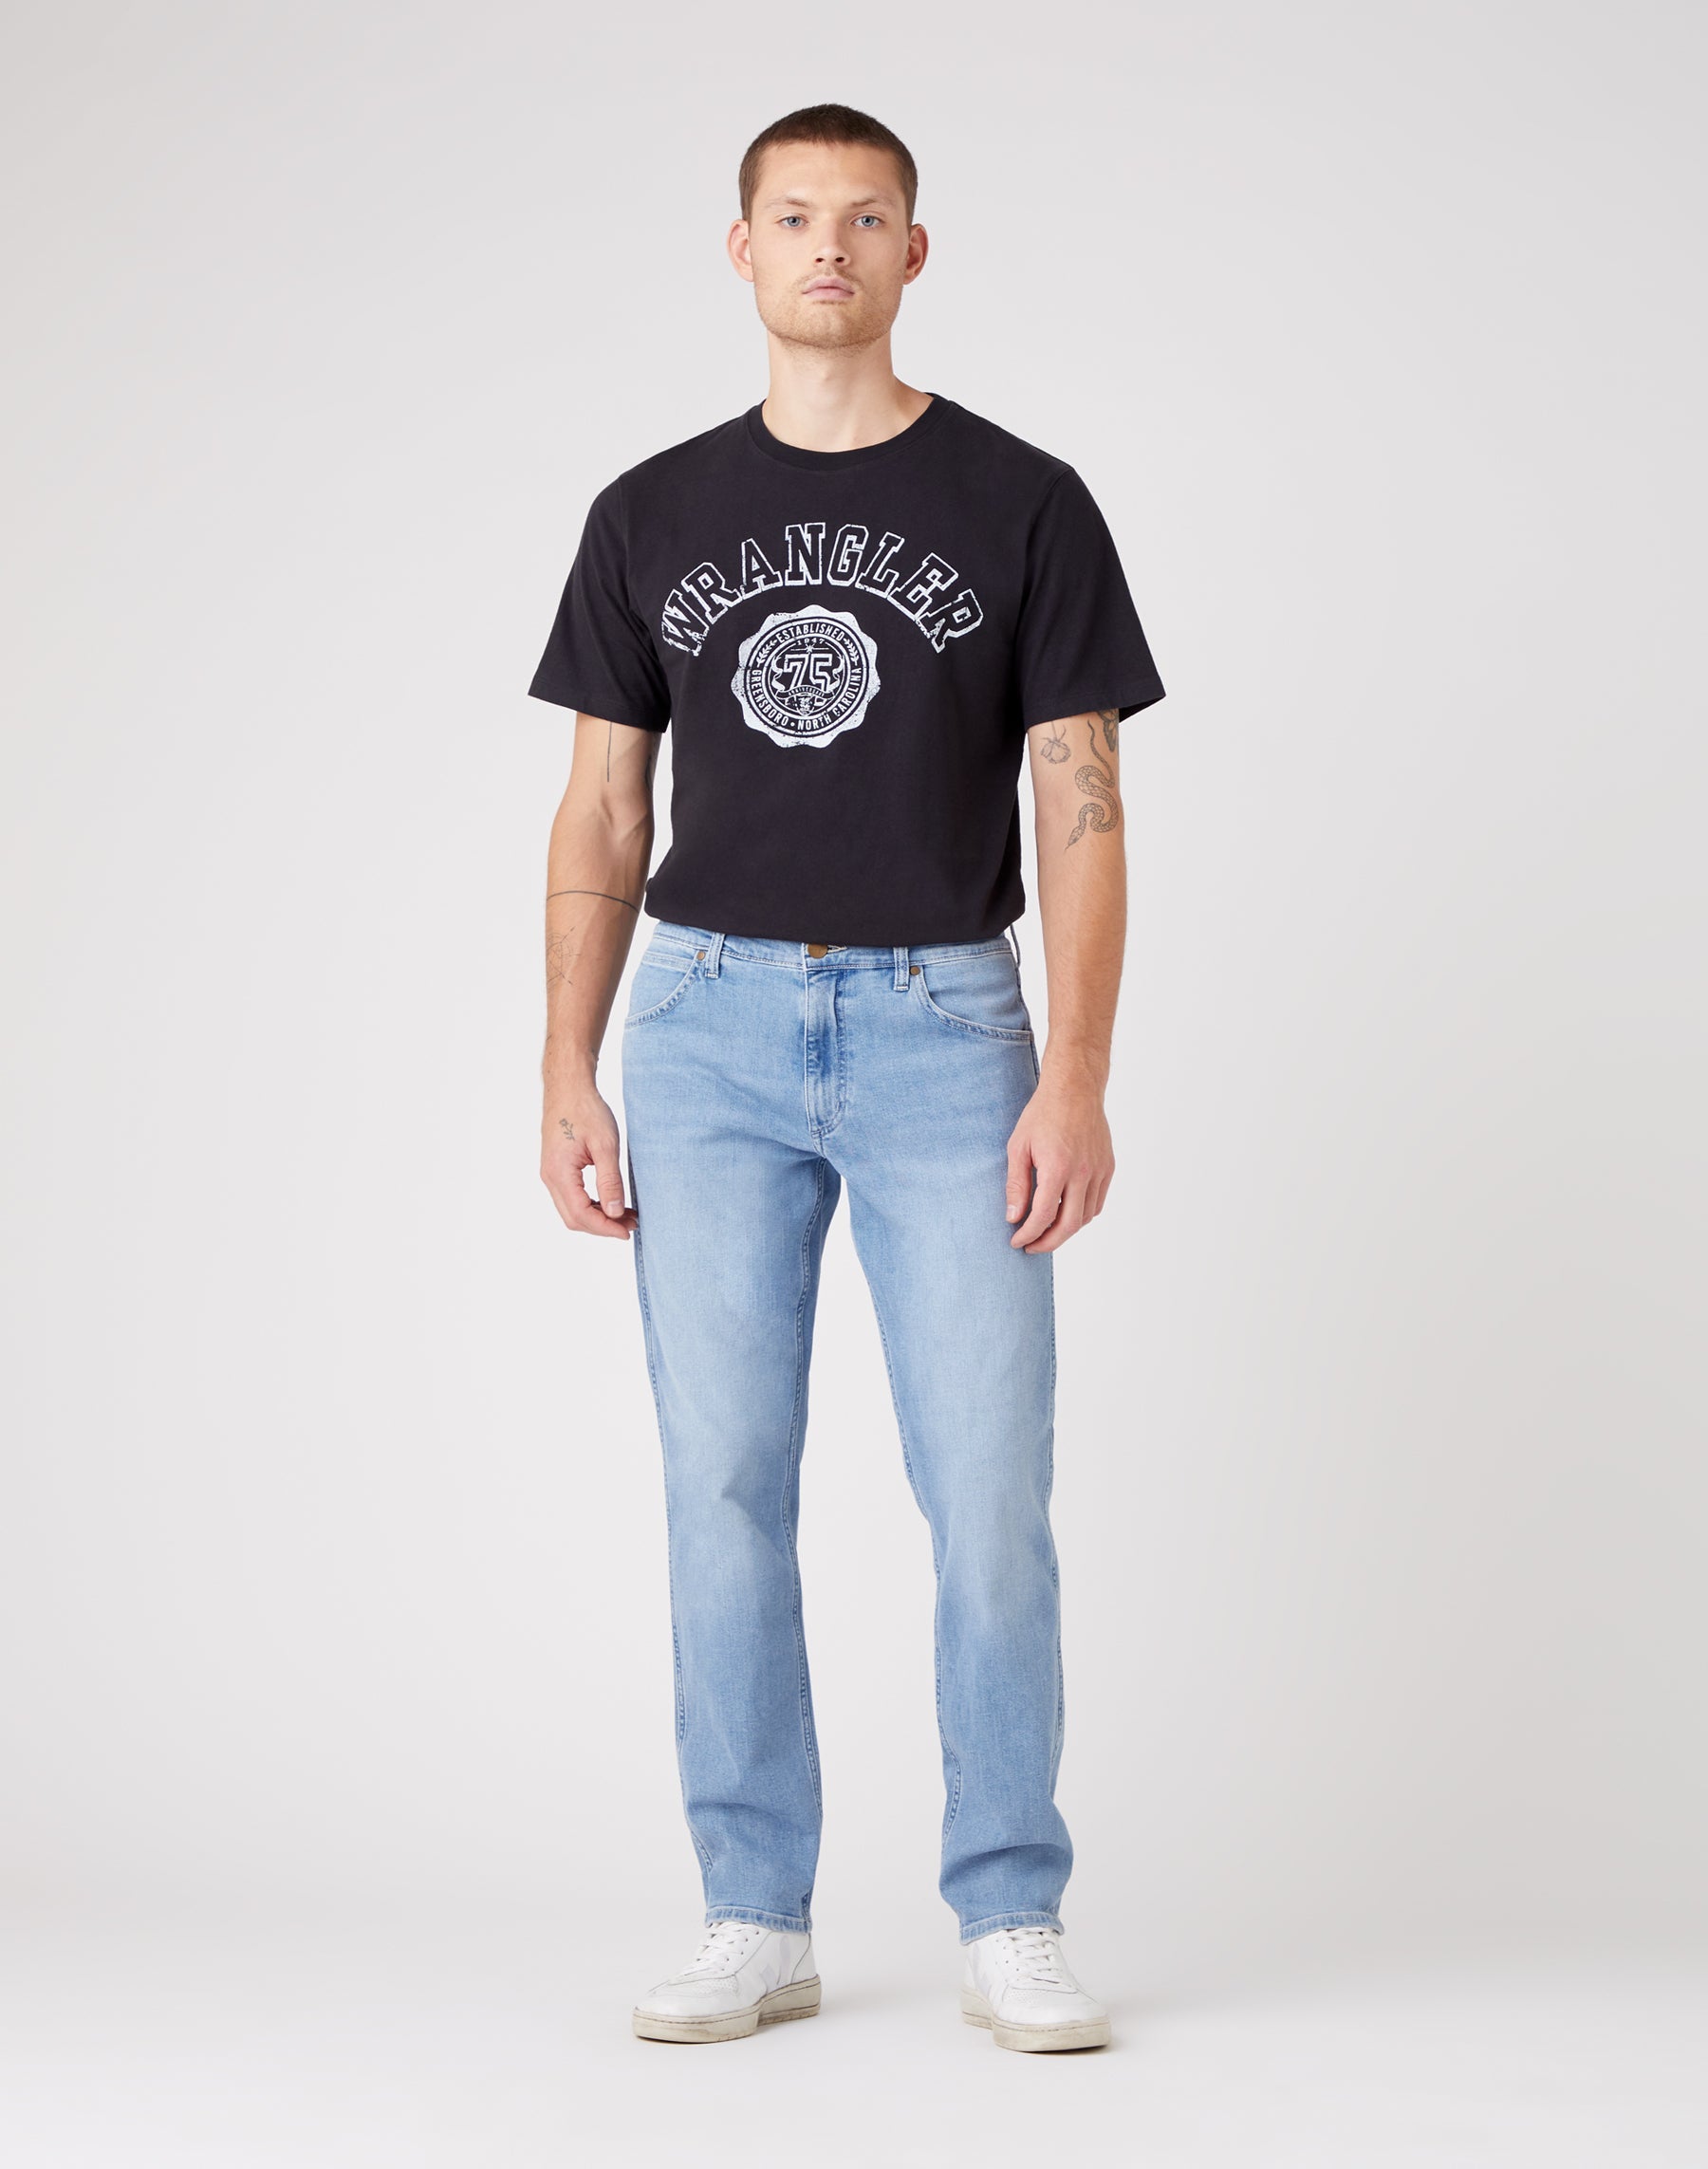 Greensboro Low Stretch in Highlite Jeans Wrangler   